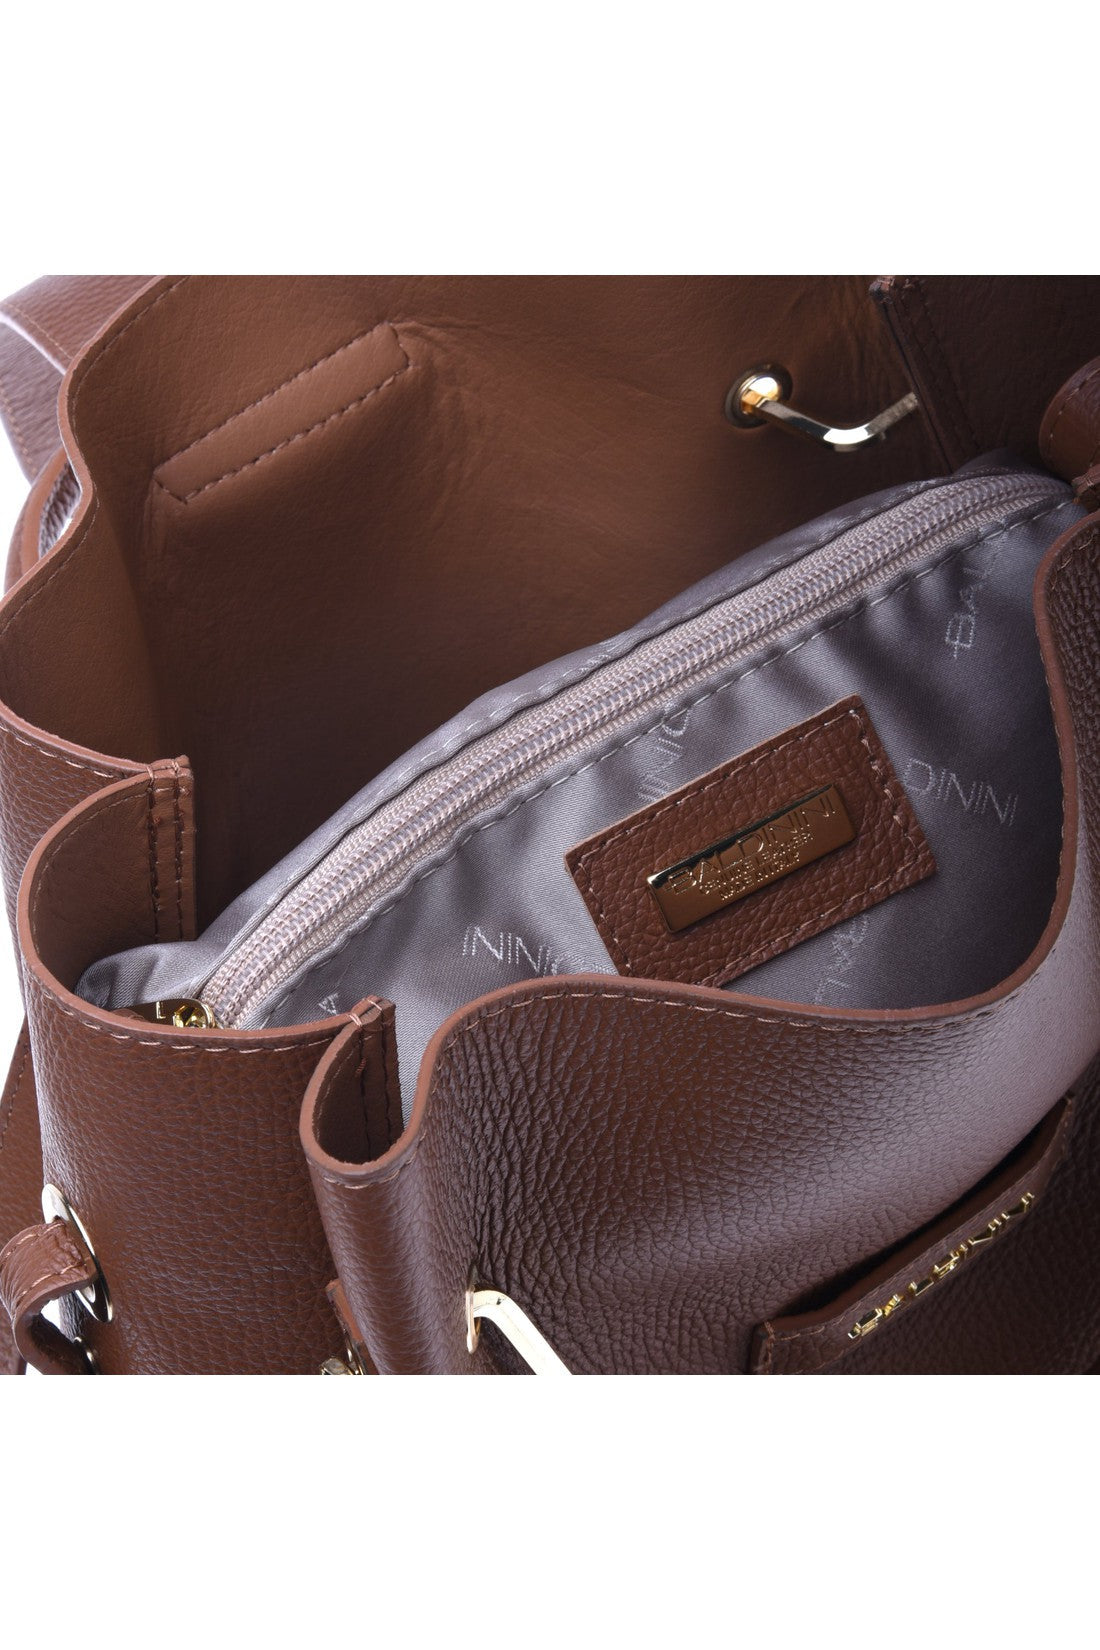 Shoulder bag in tan tumbled leather